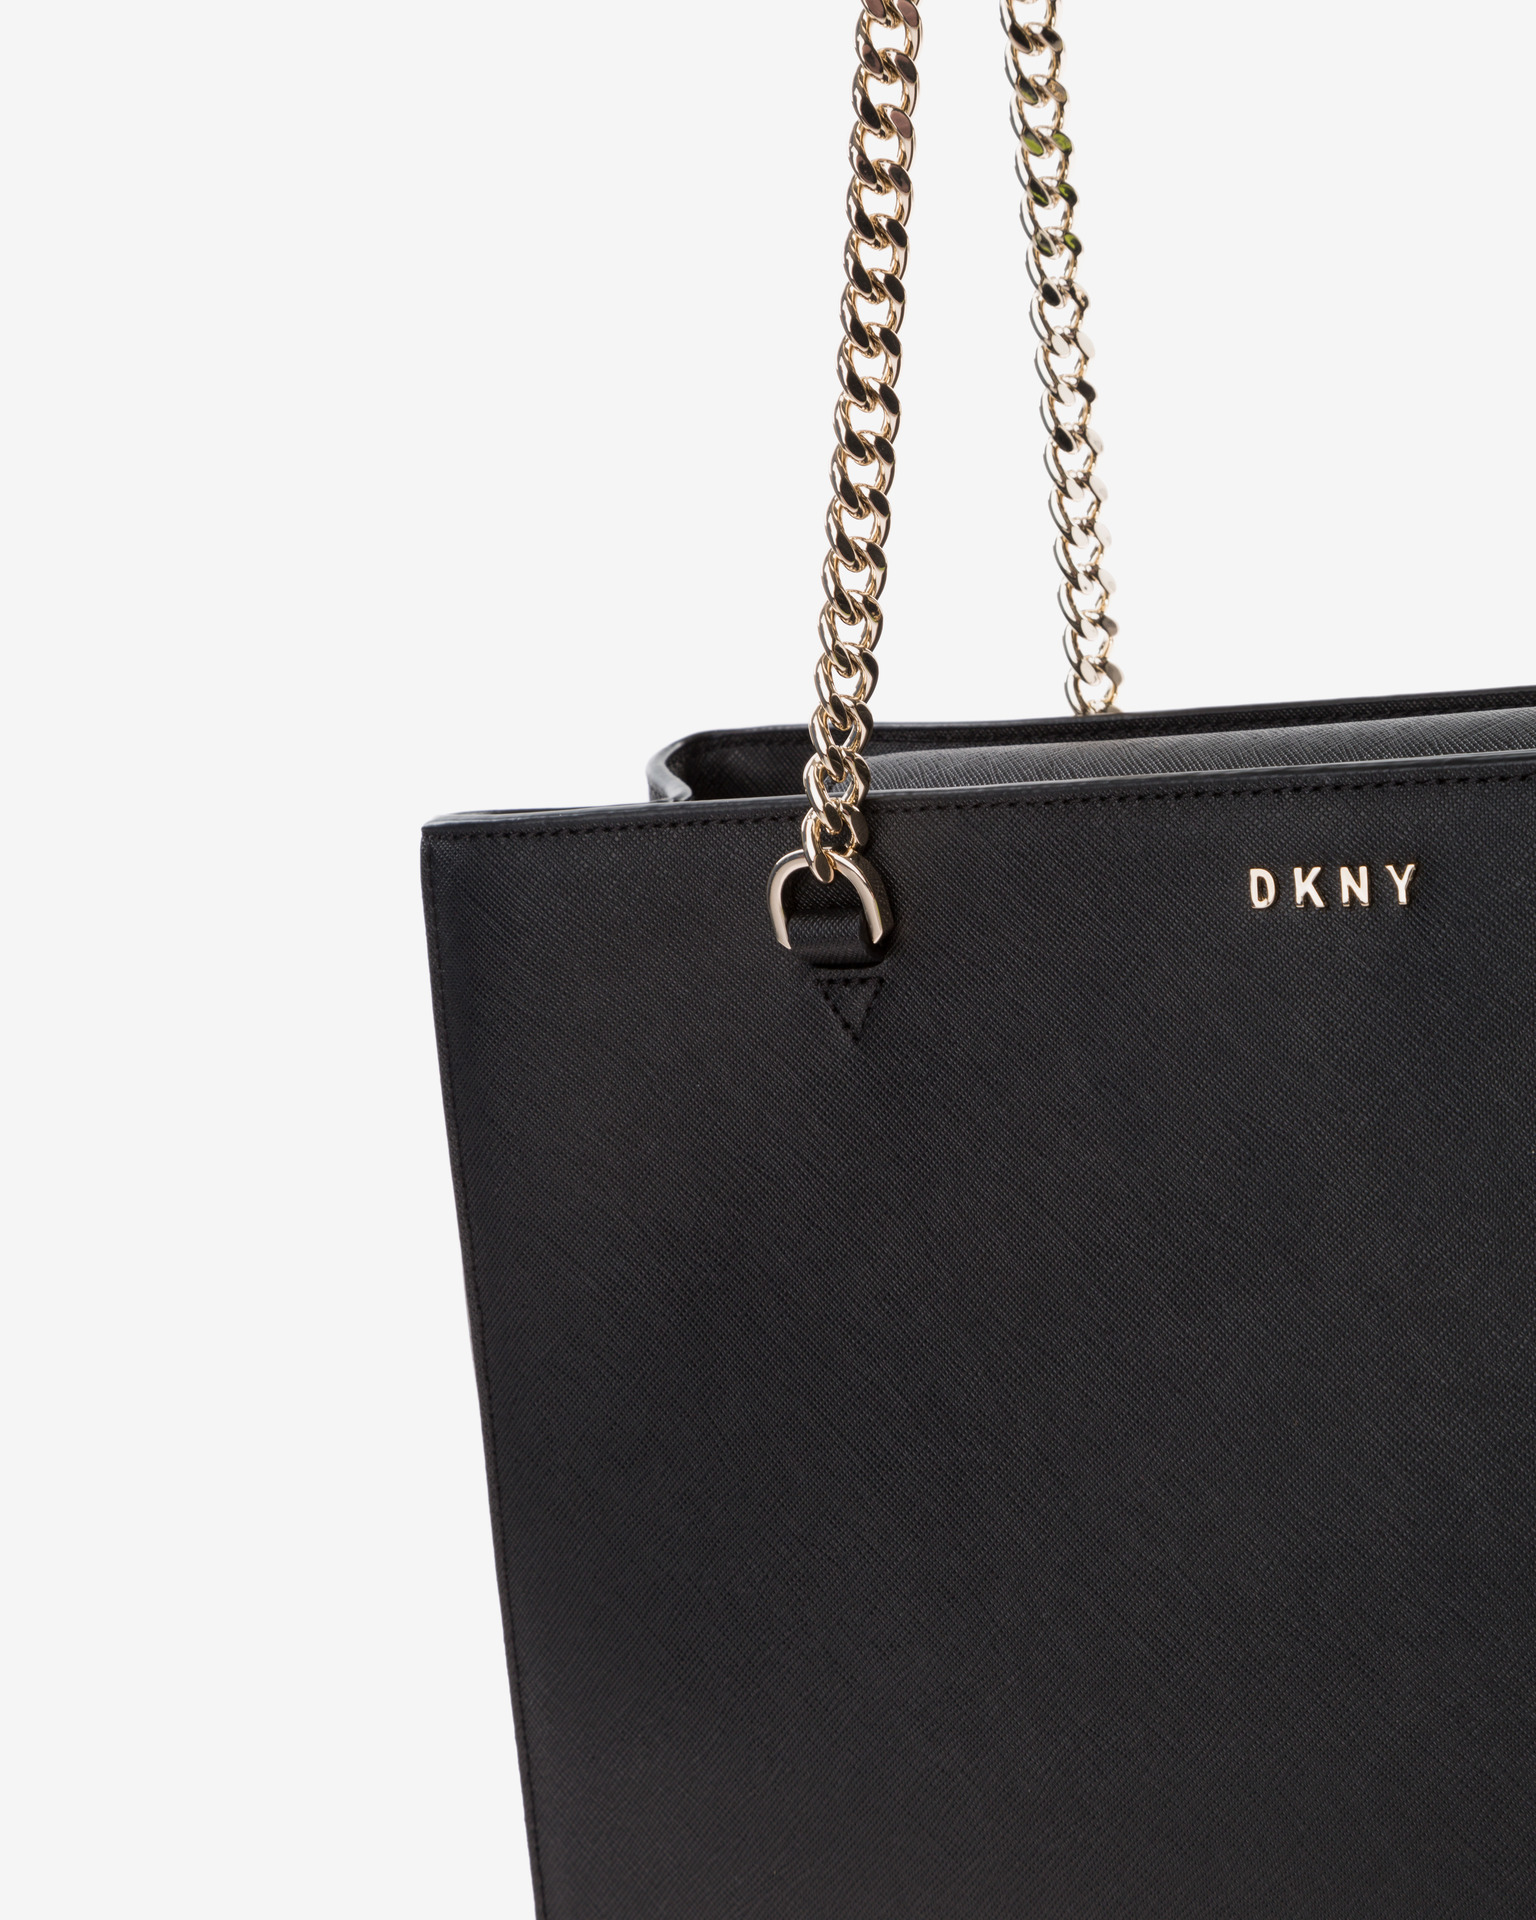 DKNY Women's Bryant Park Shopper Tote Bag - Black